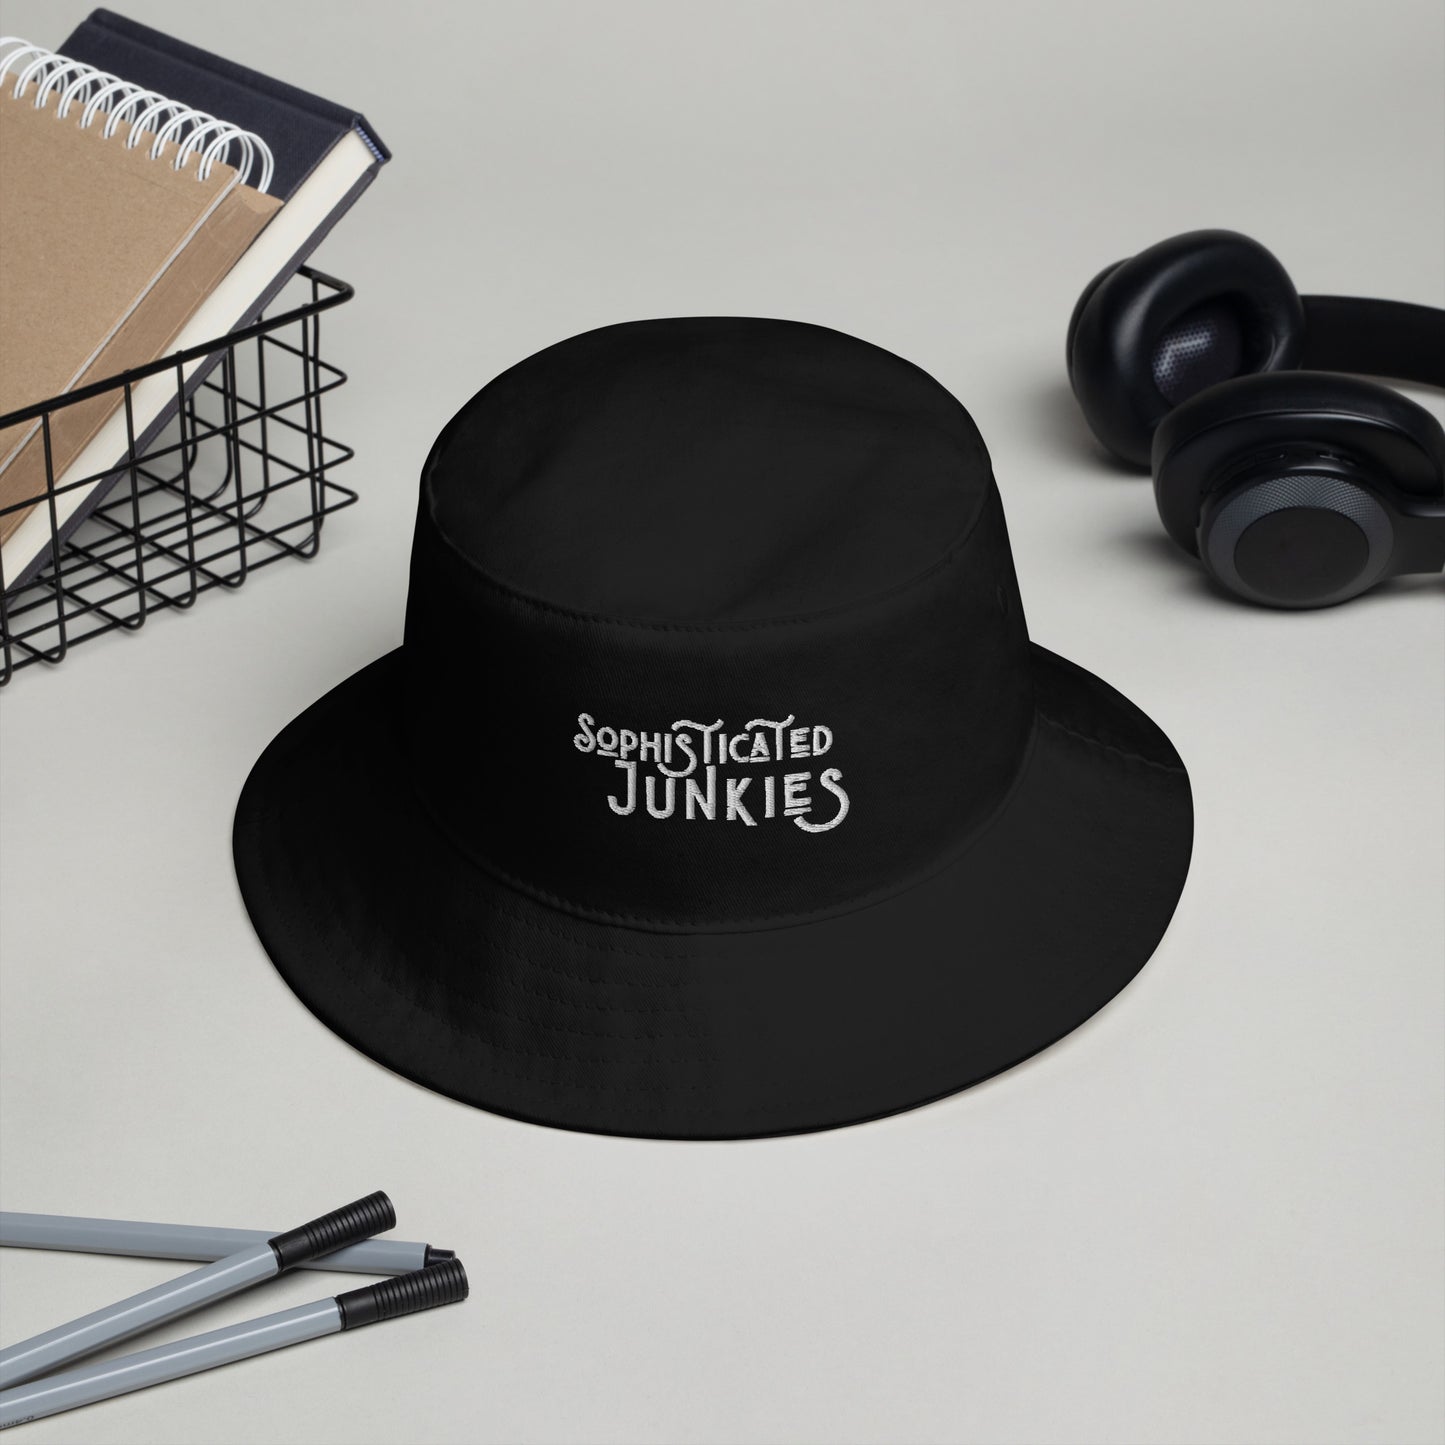 Sophisticated Junkies Bucket Hat